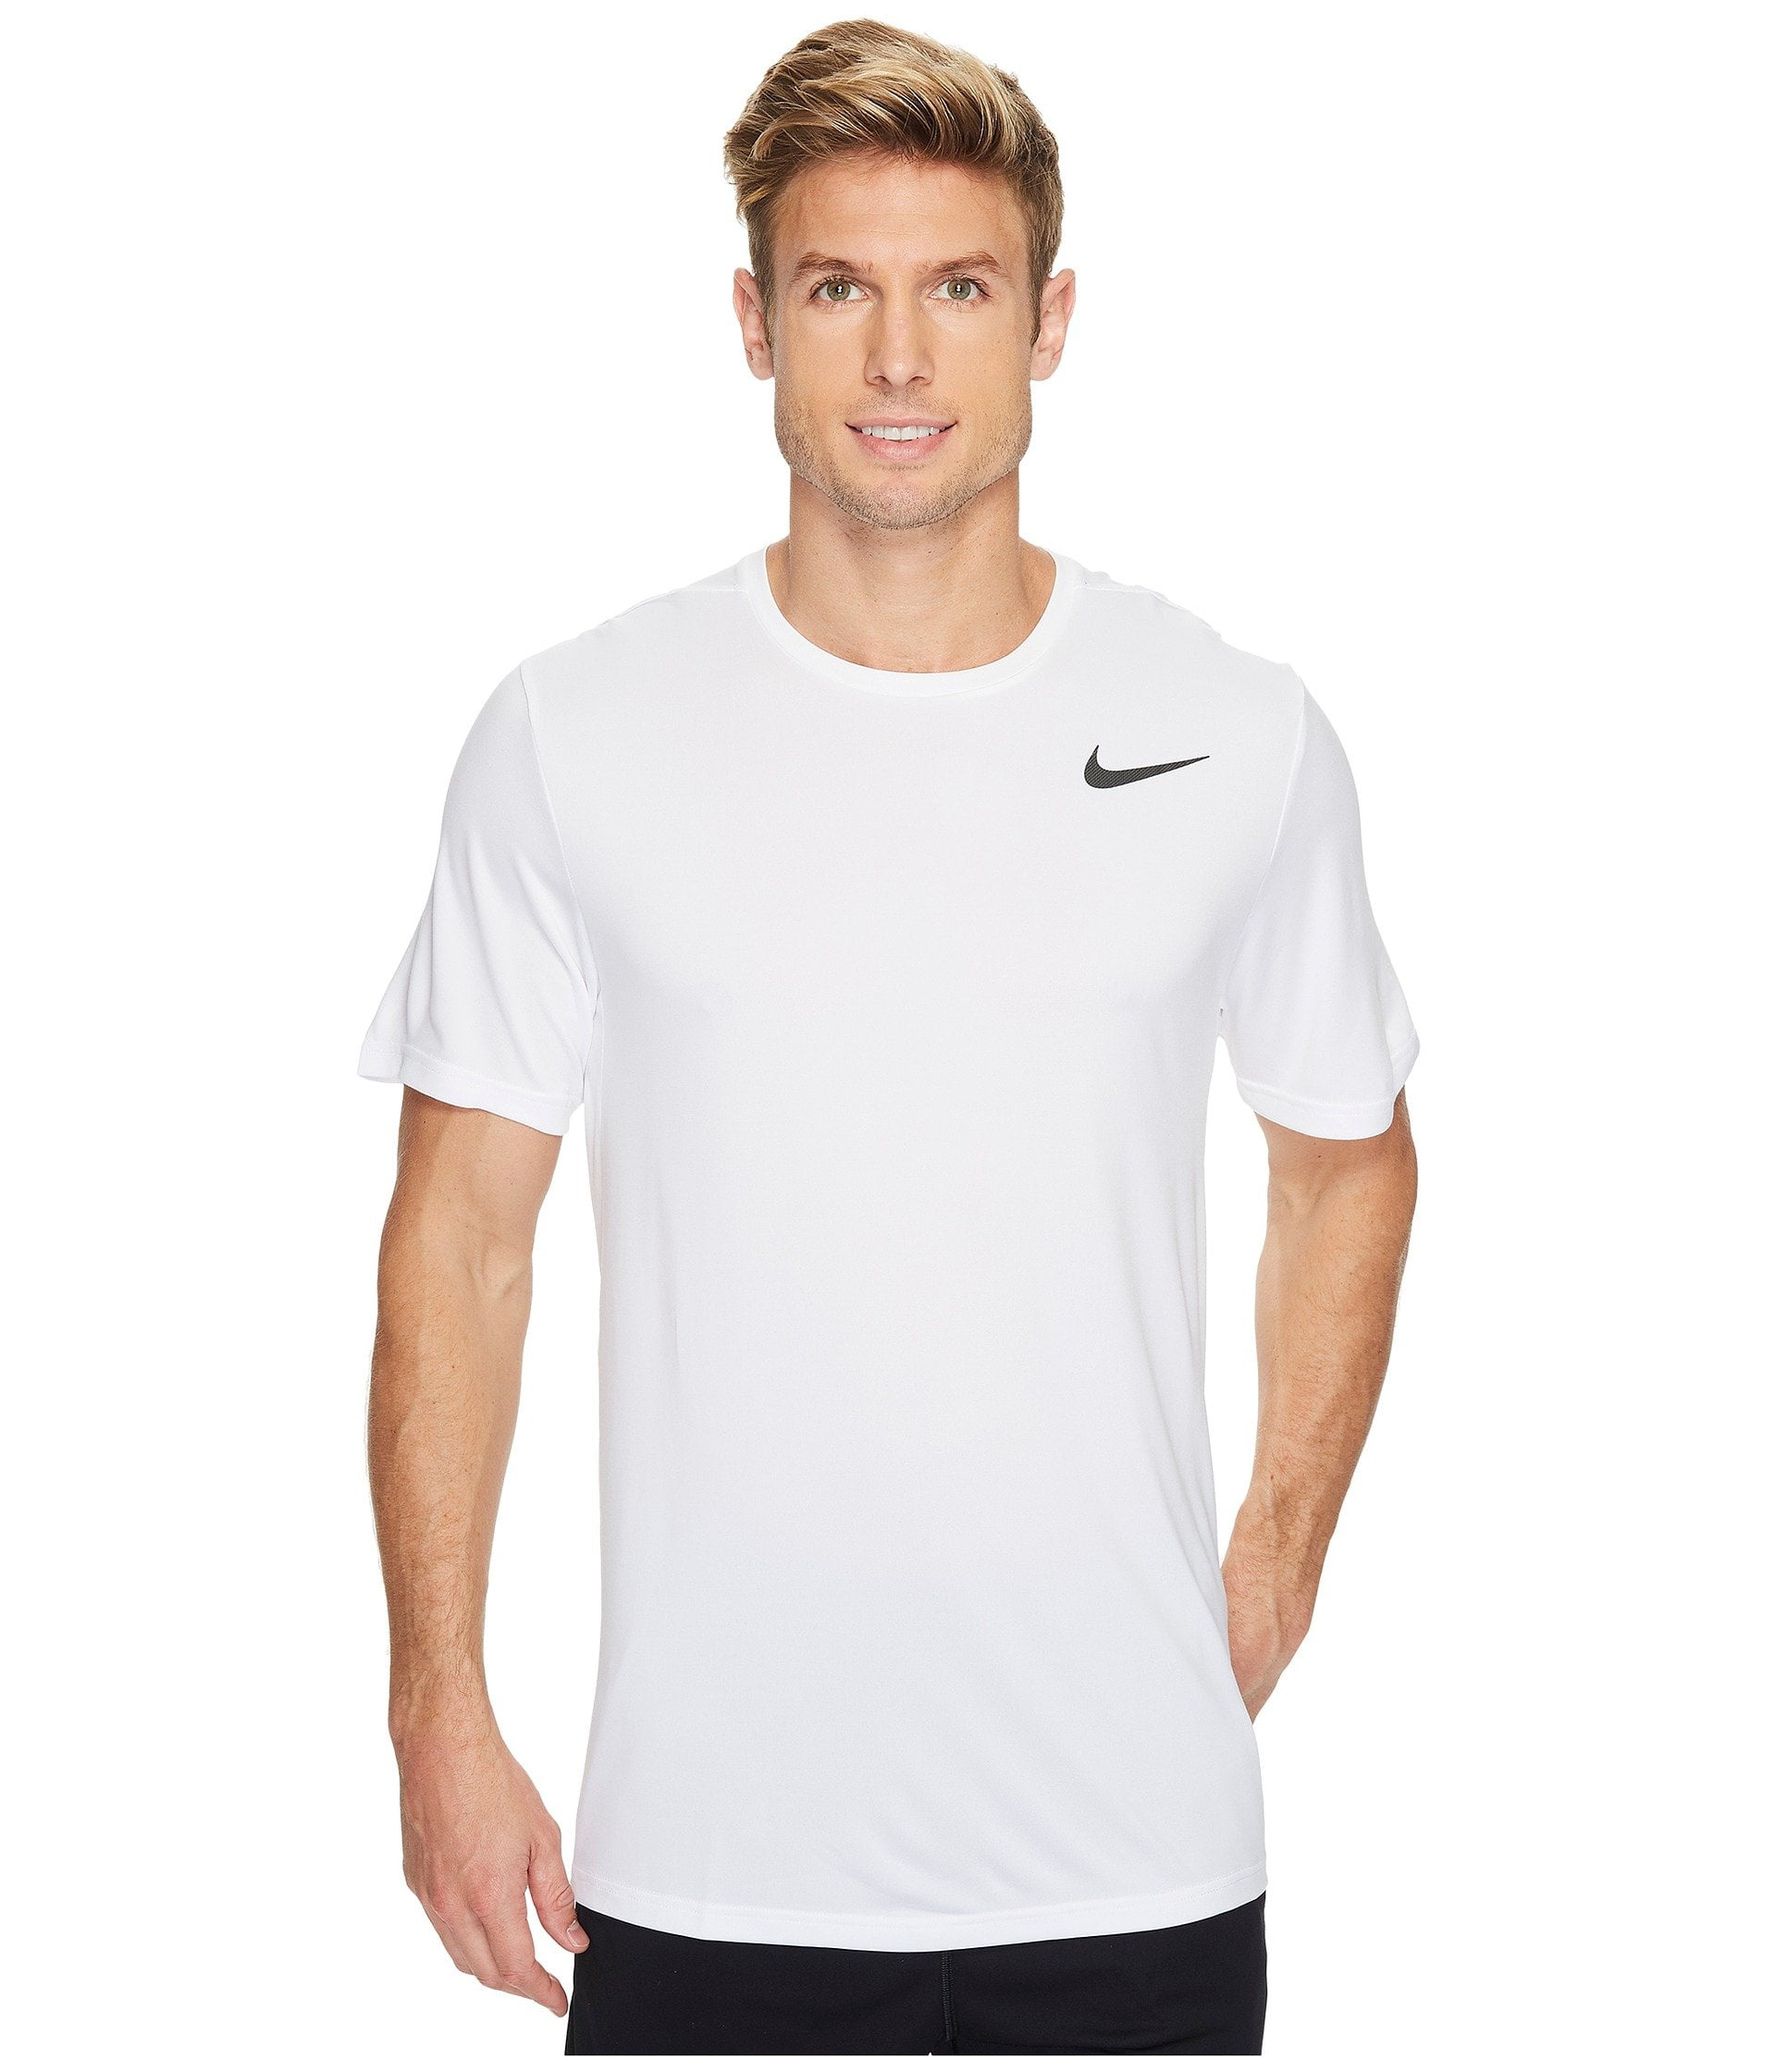 Superposición Misión metálico Nike Men's Dri-Fit Training T-Shirt X-Large White - Walmart.com